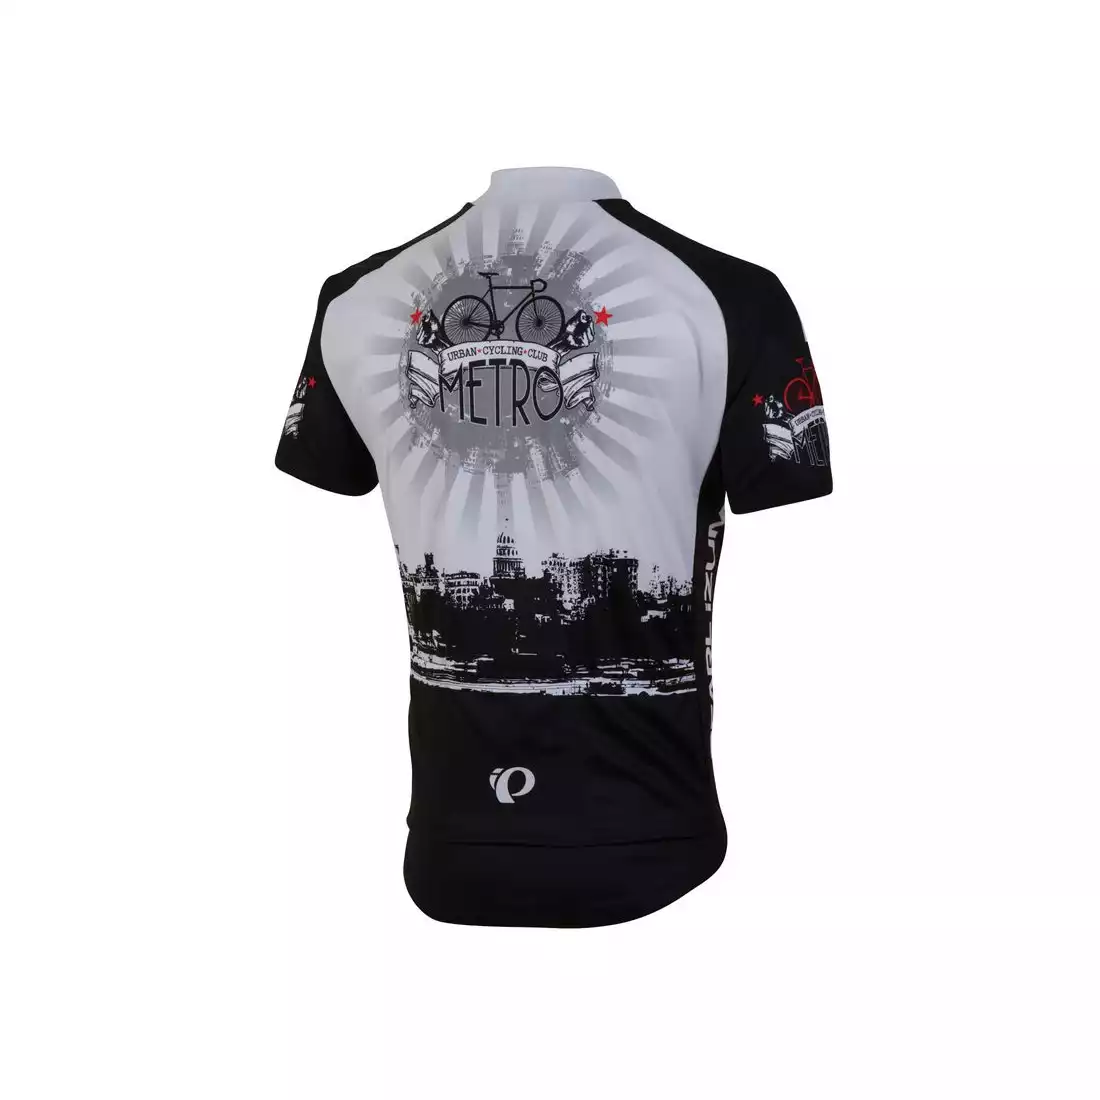 PEARL IZUMI - 0705-4IY SELECT LTD - męska koszulka rowerowa, kolor: Biało-czarny